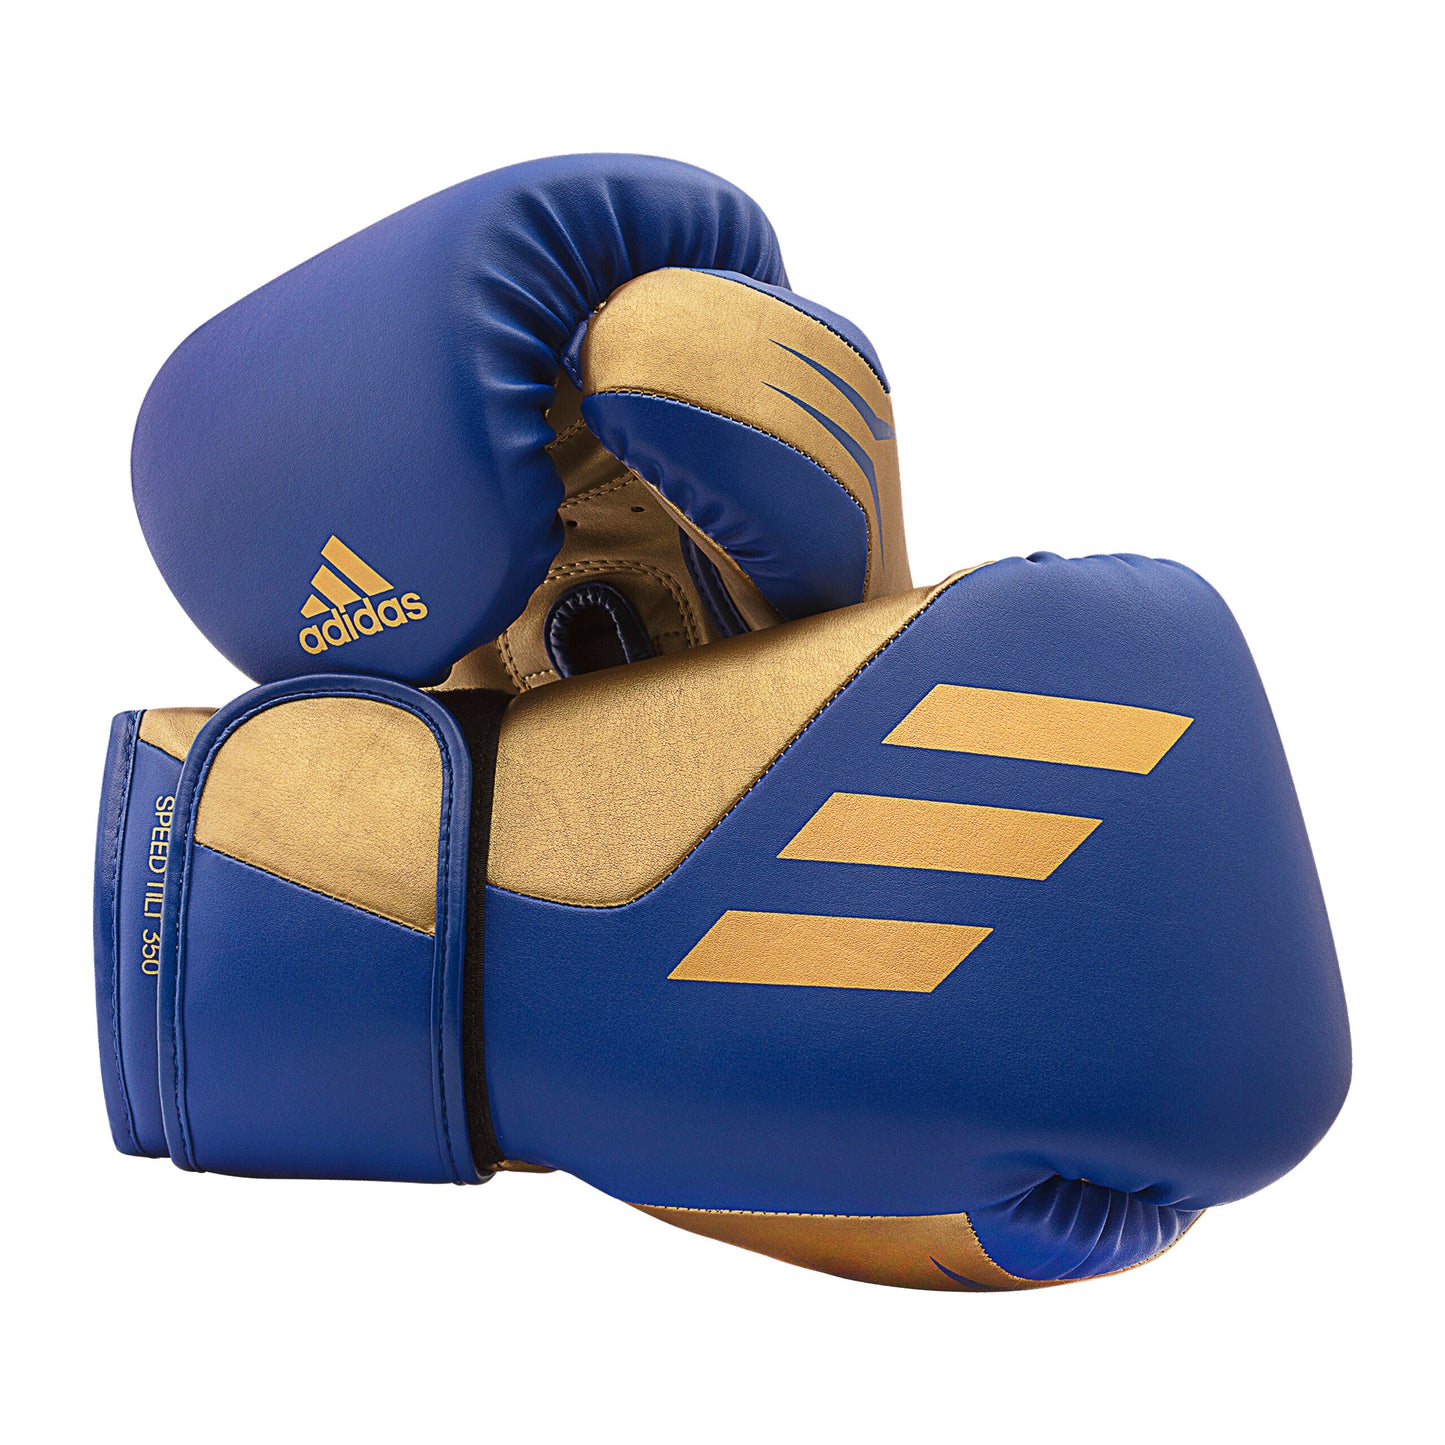 Adispd350tg Adidas Tilt Speed 350 Boxiing Gloves Blue Gold 05